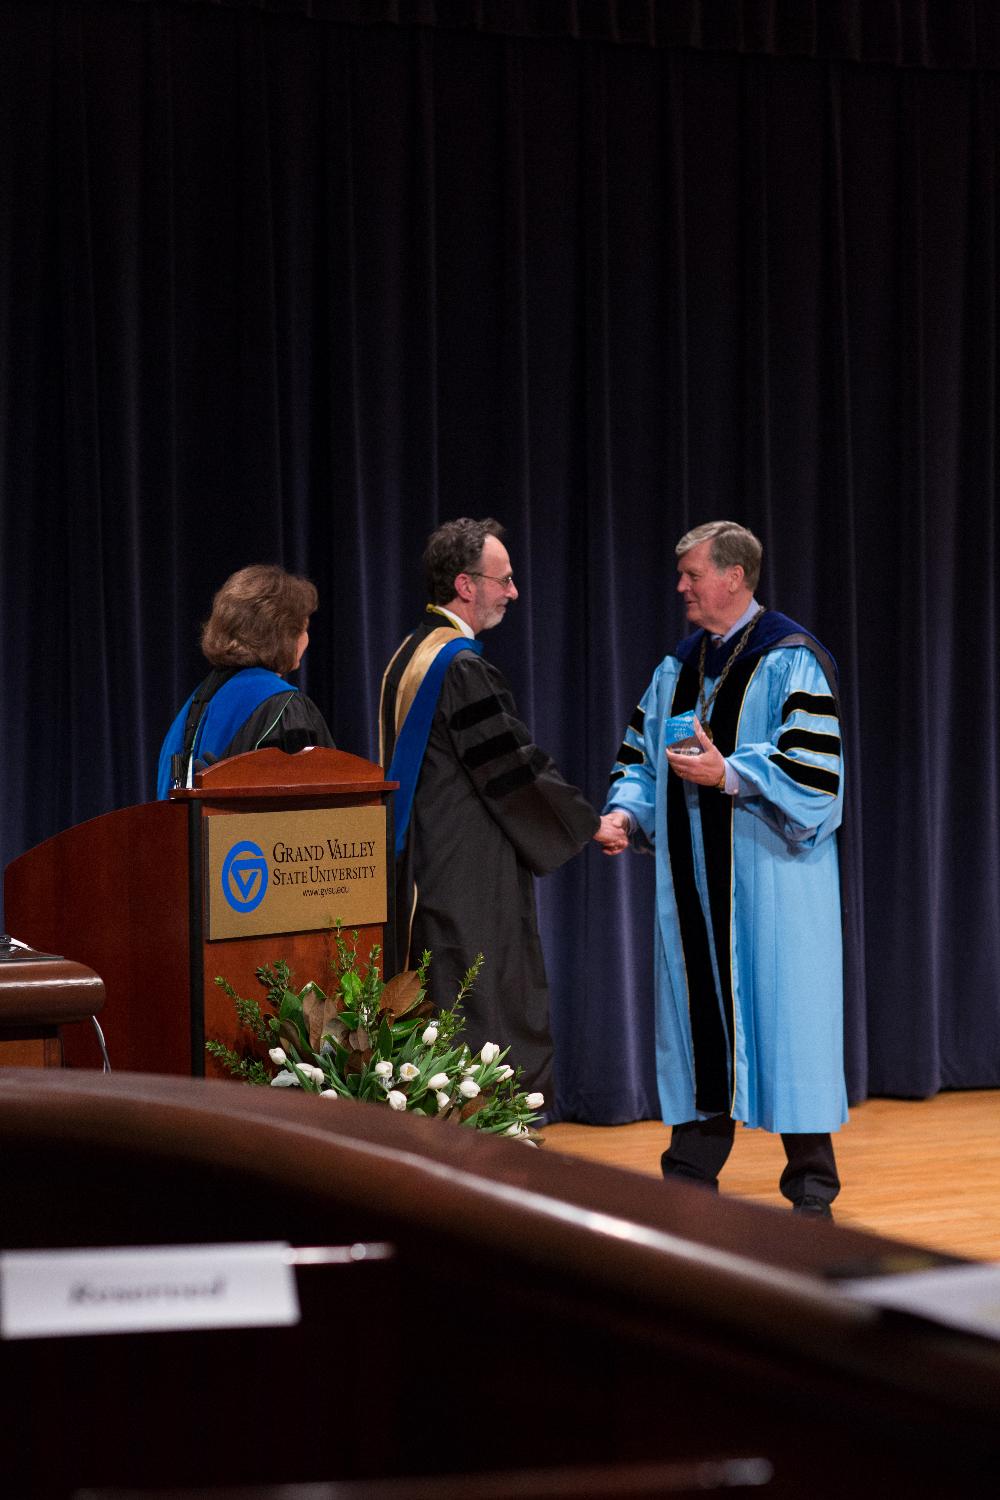 Former Provost Davis and President Emeritus Haas congratulate faculty member who is receiving an award